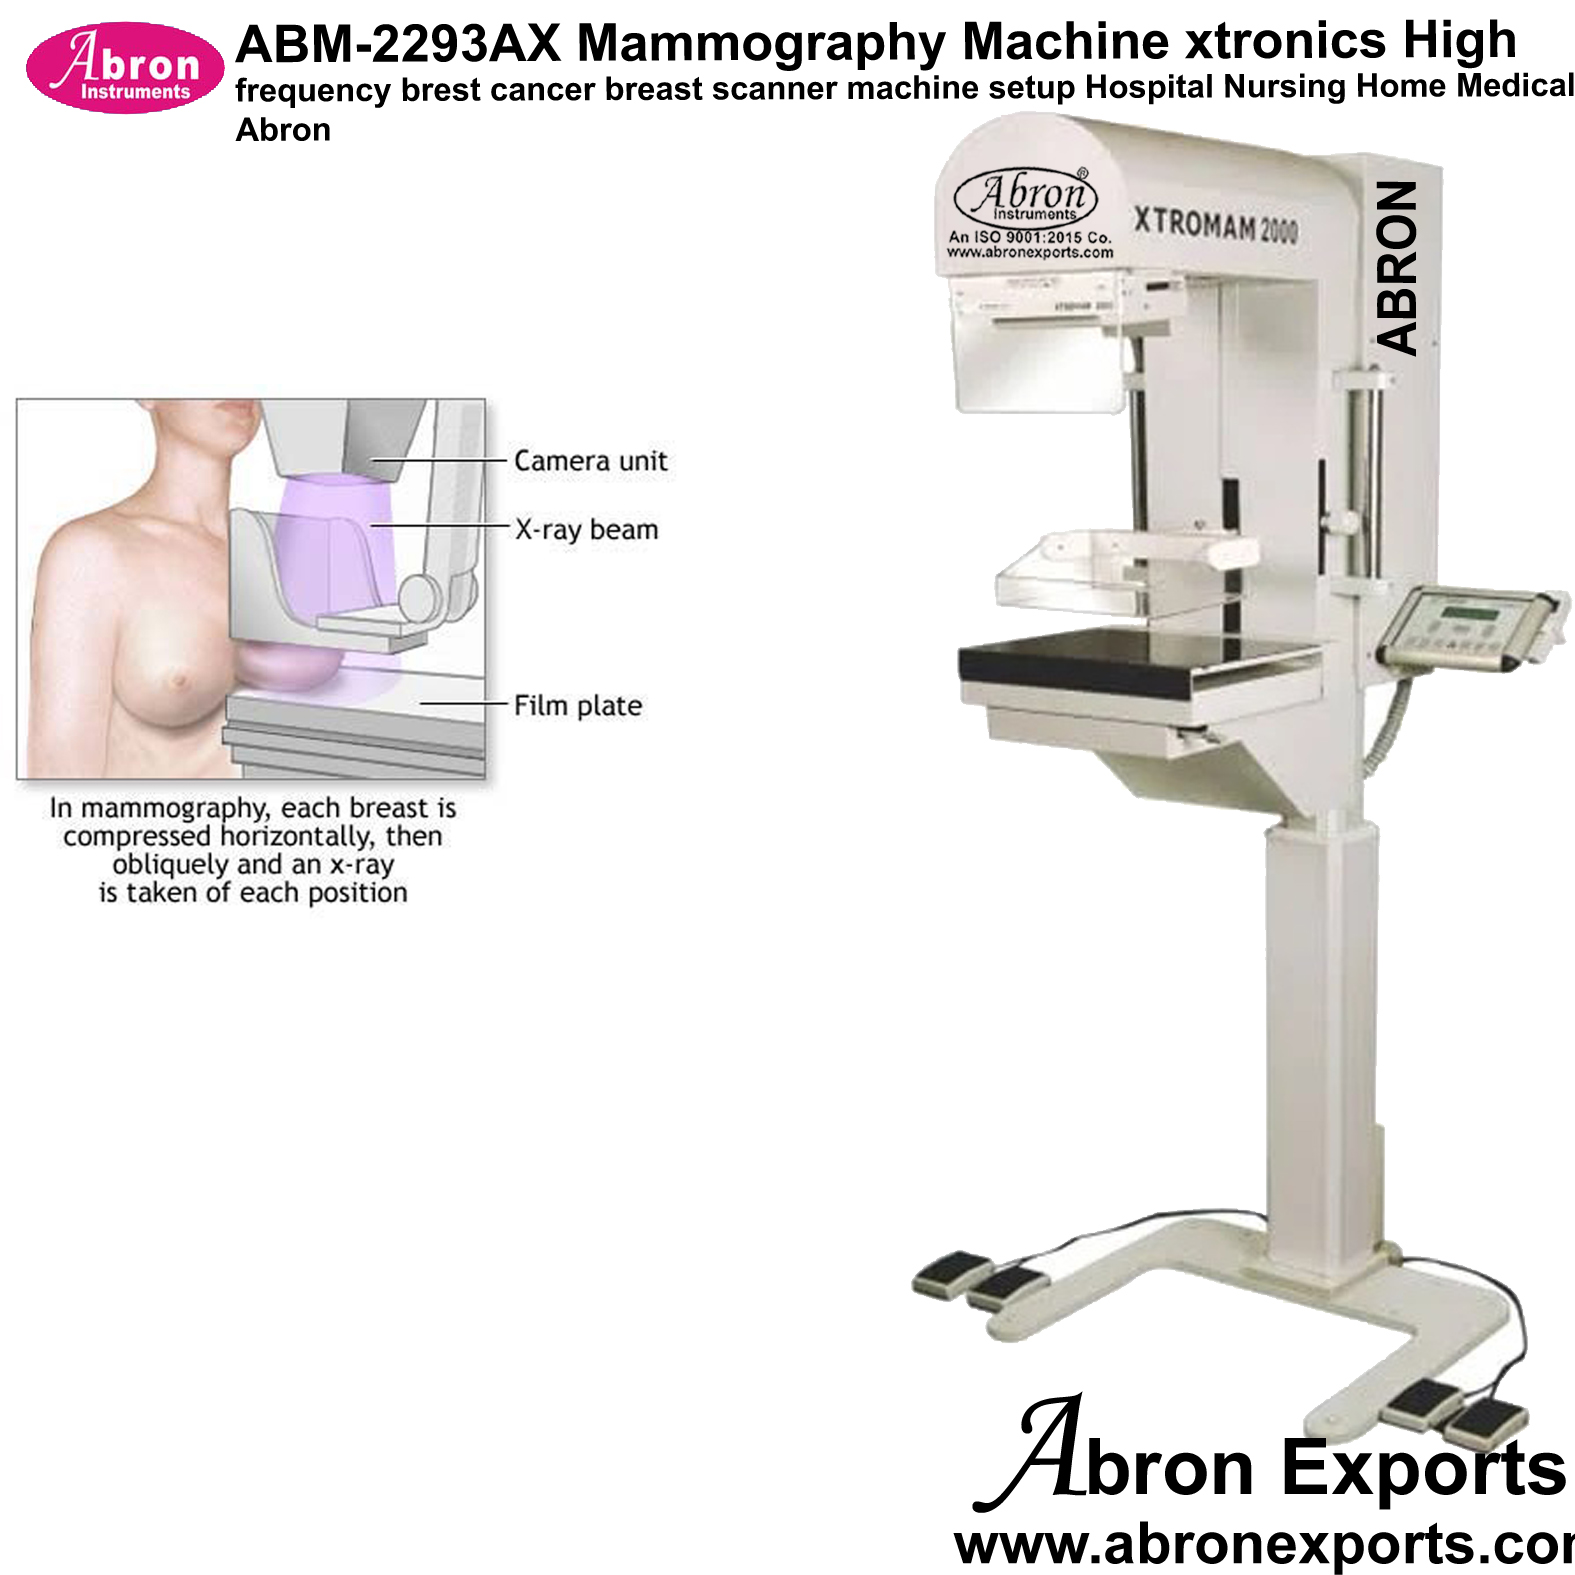 Mammography Machine xtronics High frequency brest cancer breast scanner machine setup Hospital Nursing Home Medical Abron ABM-2293AX 